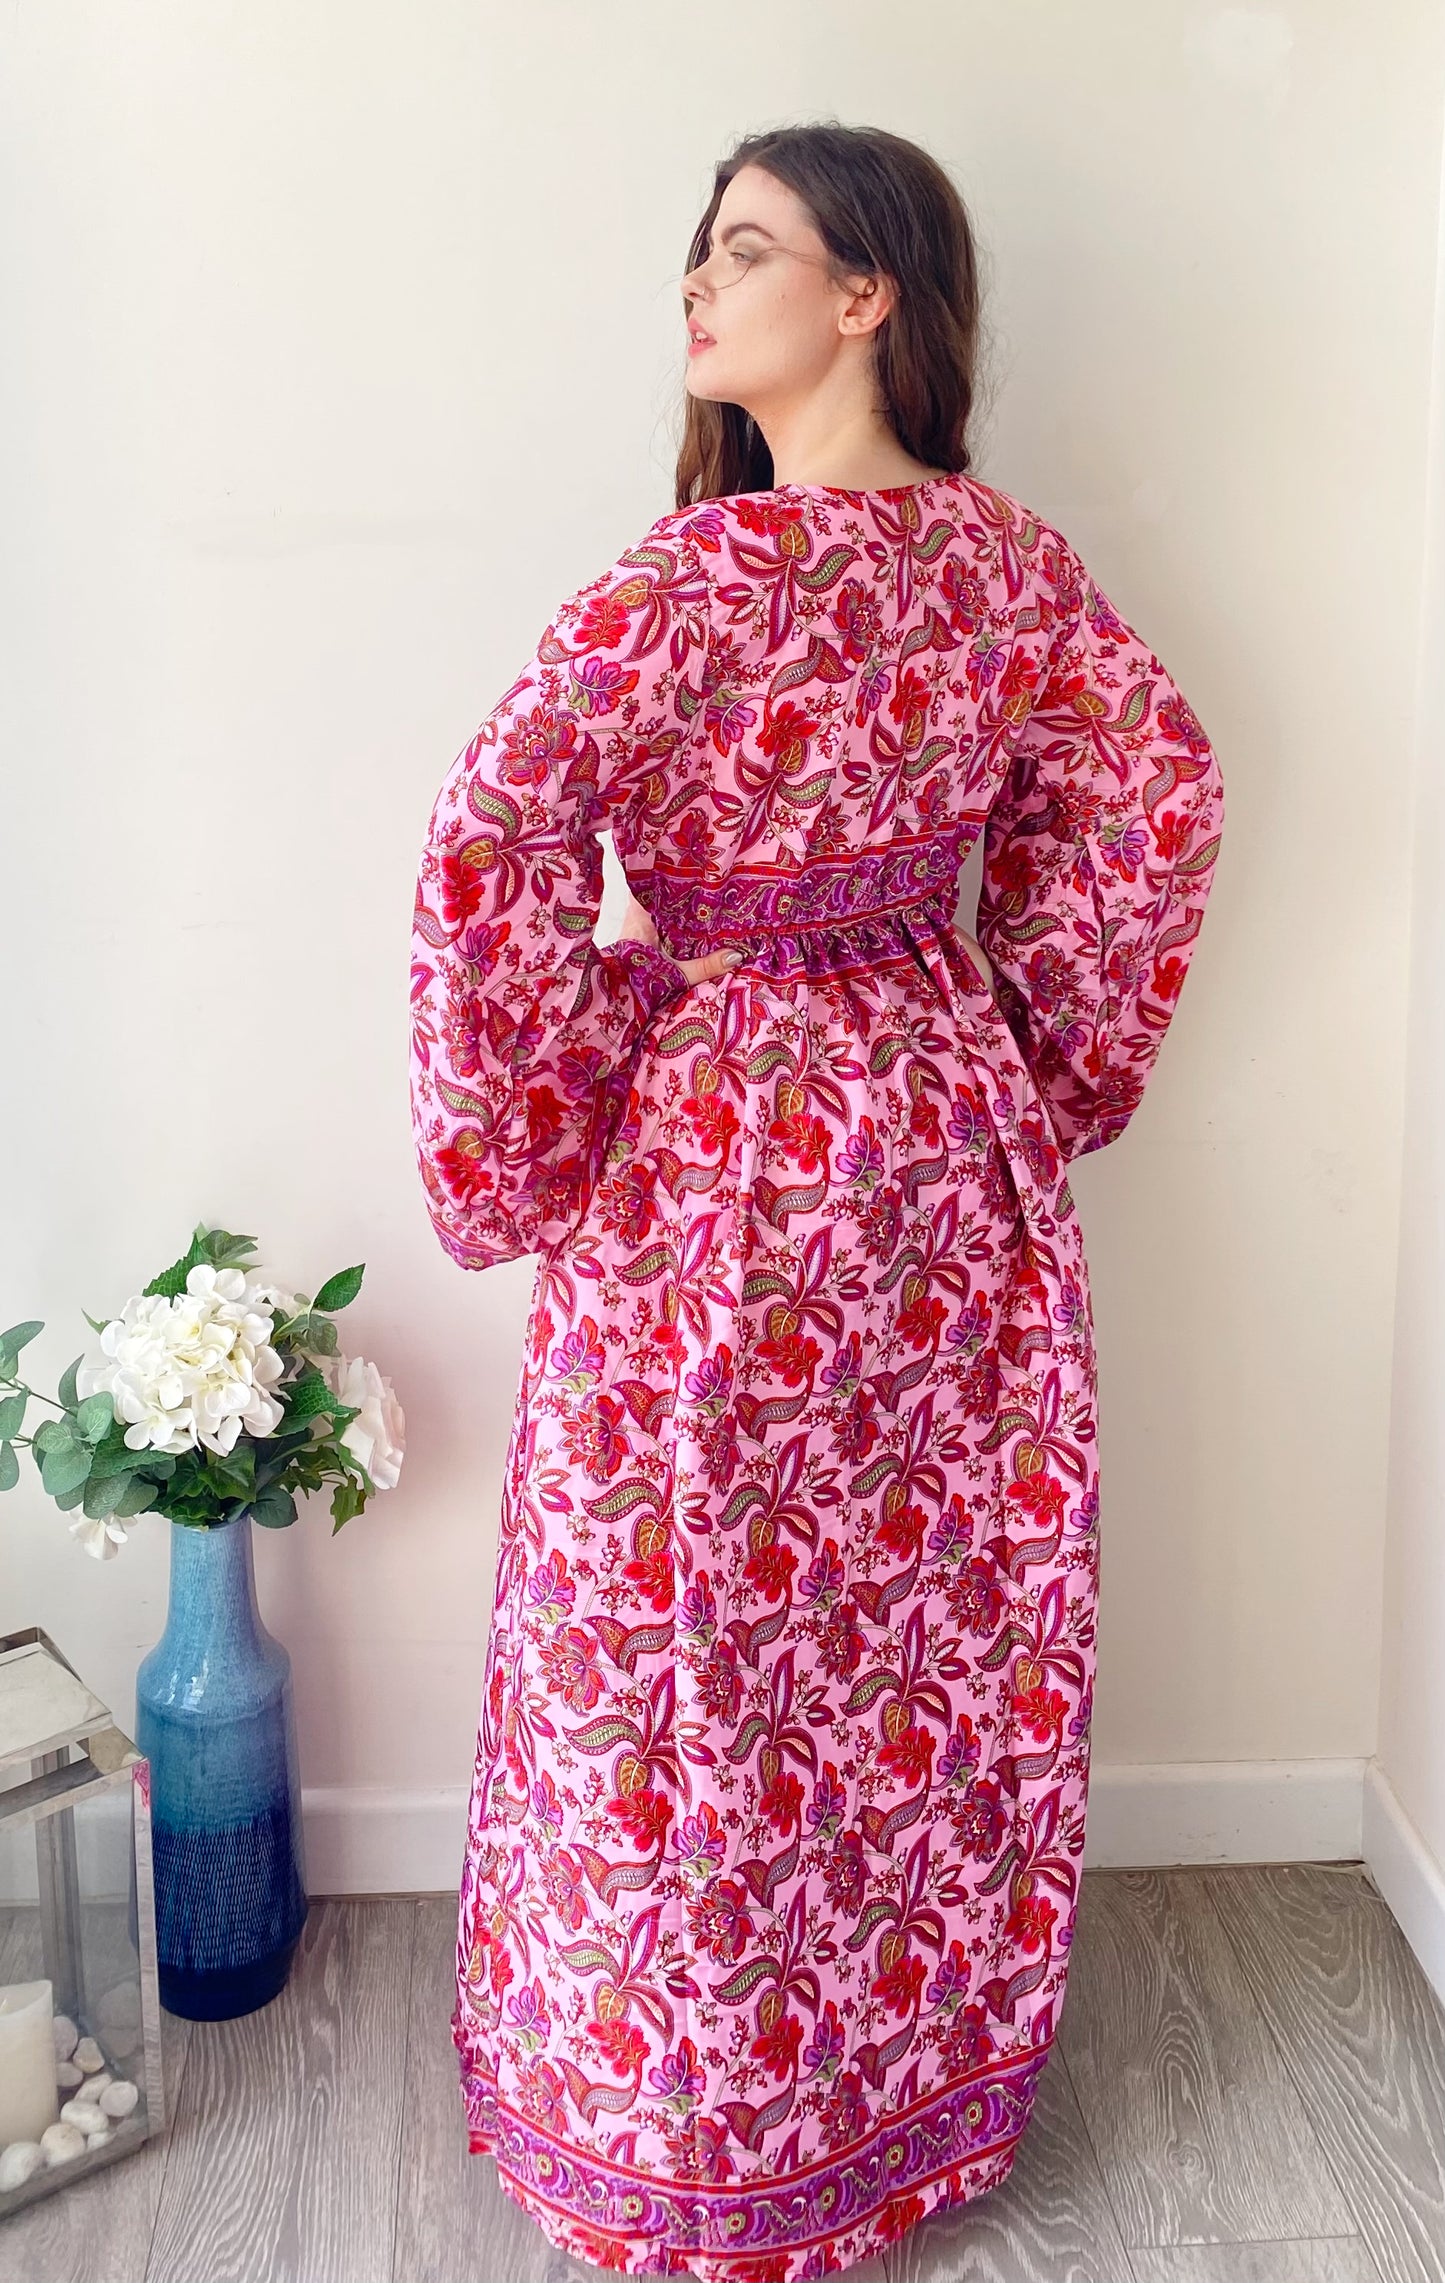 Nova pink floral-print silk maxi dress free size UK8-16DRESSES